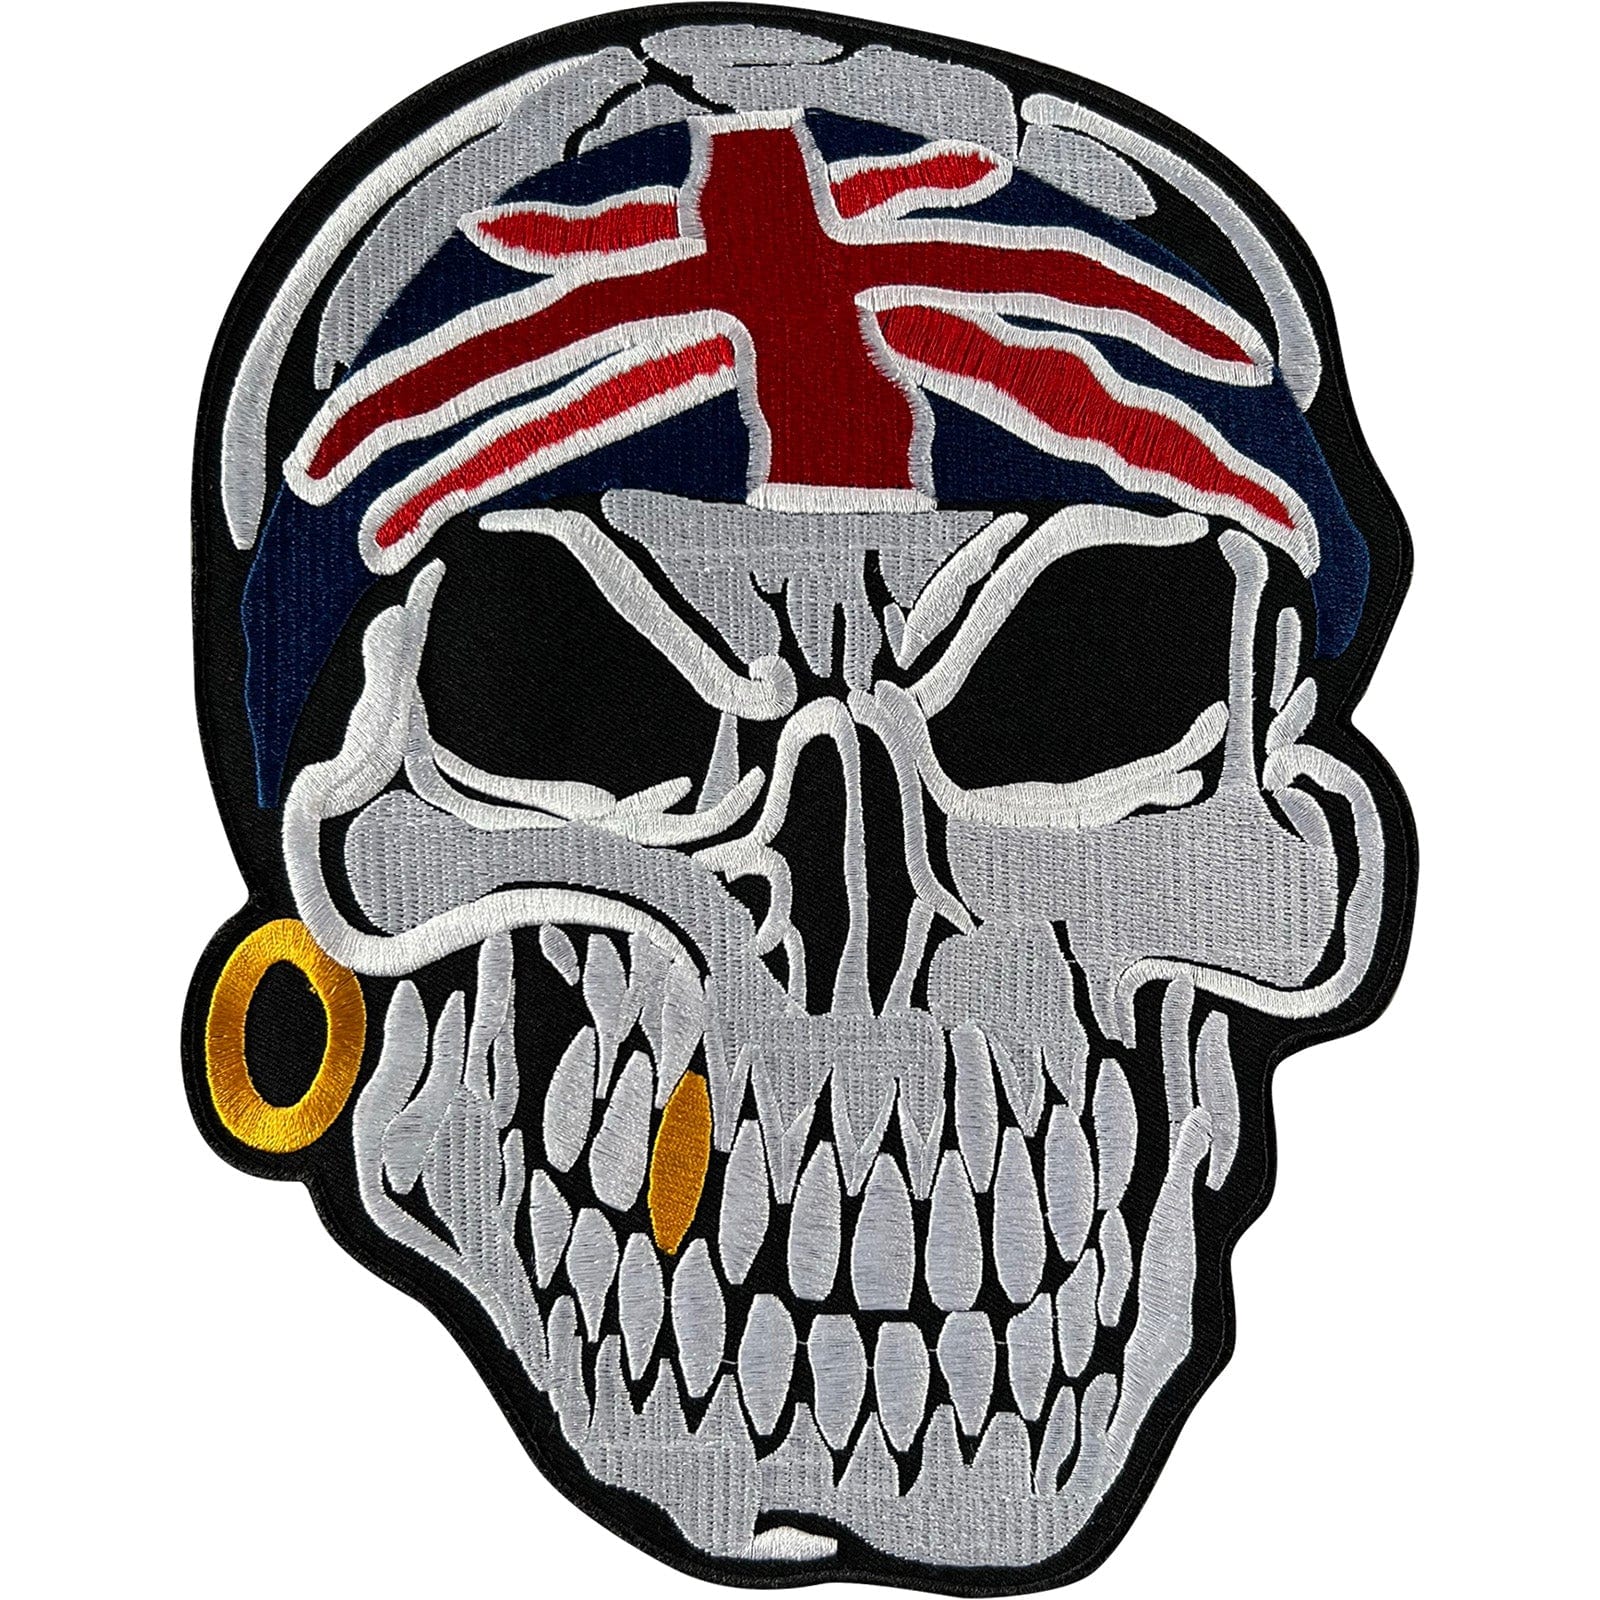 Big Large Union Jack Flag Skull Patch Iron Sew On Jacket Biker Embroidered Badge